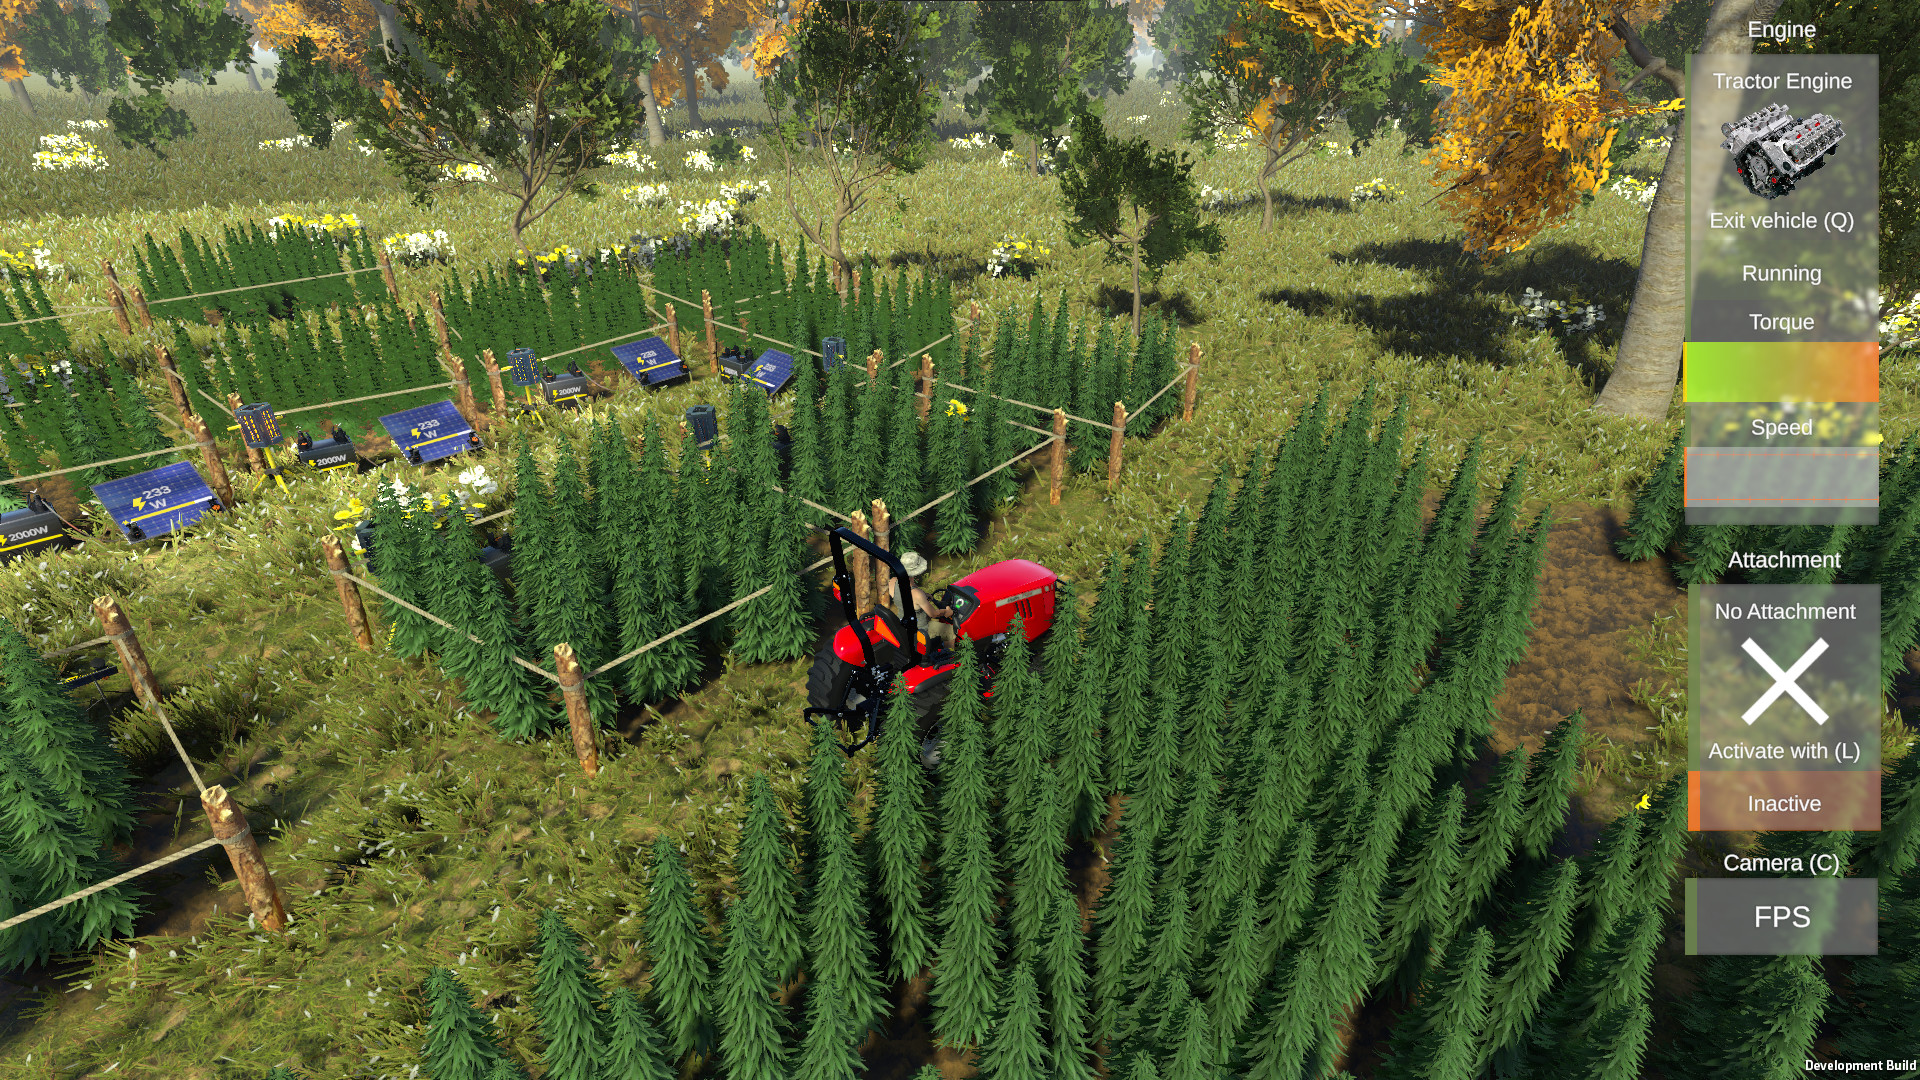 farming simulator 22 weed mod